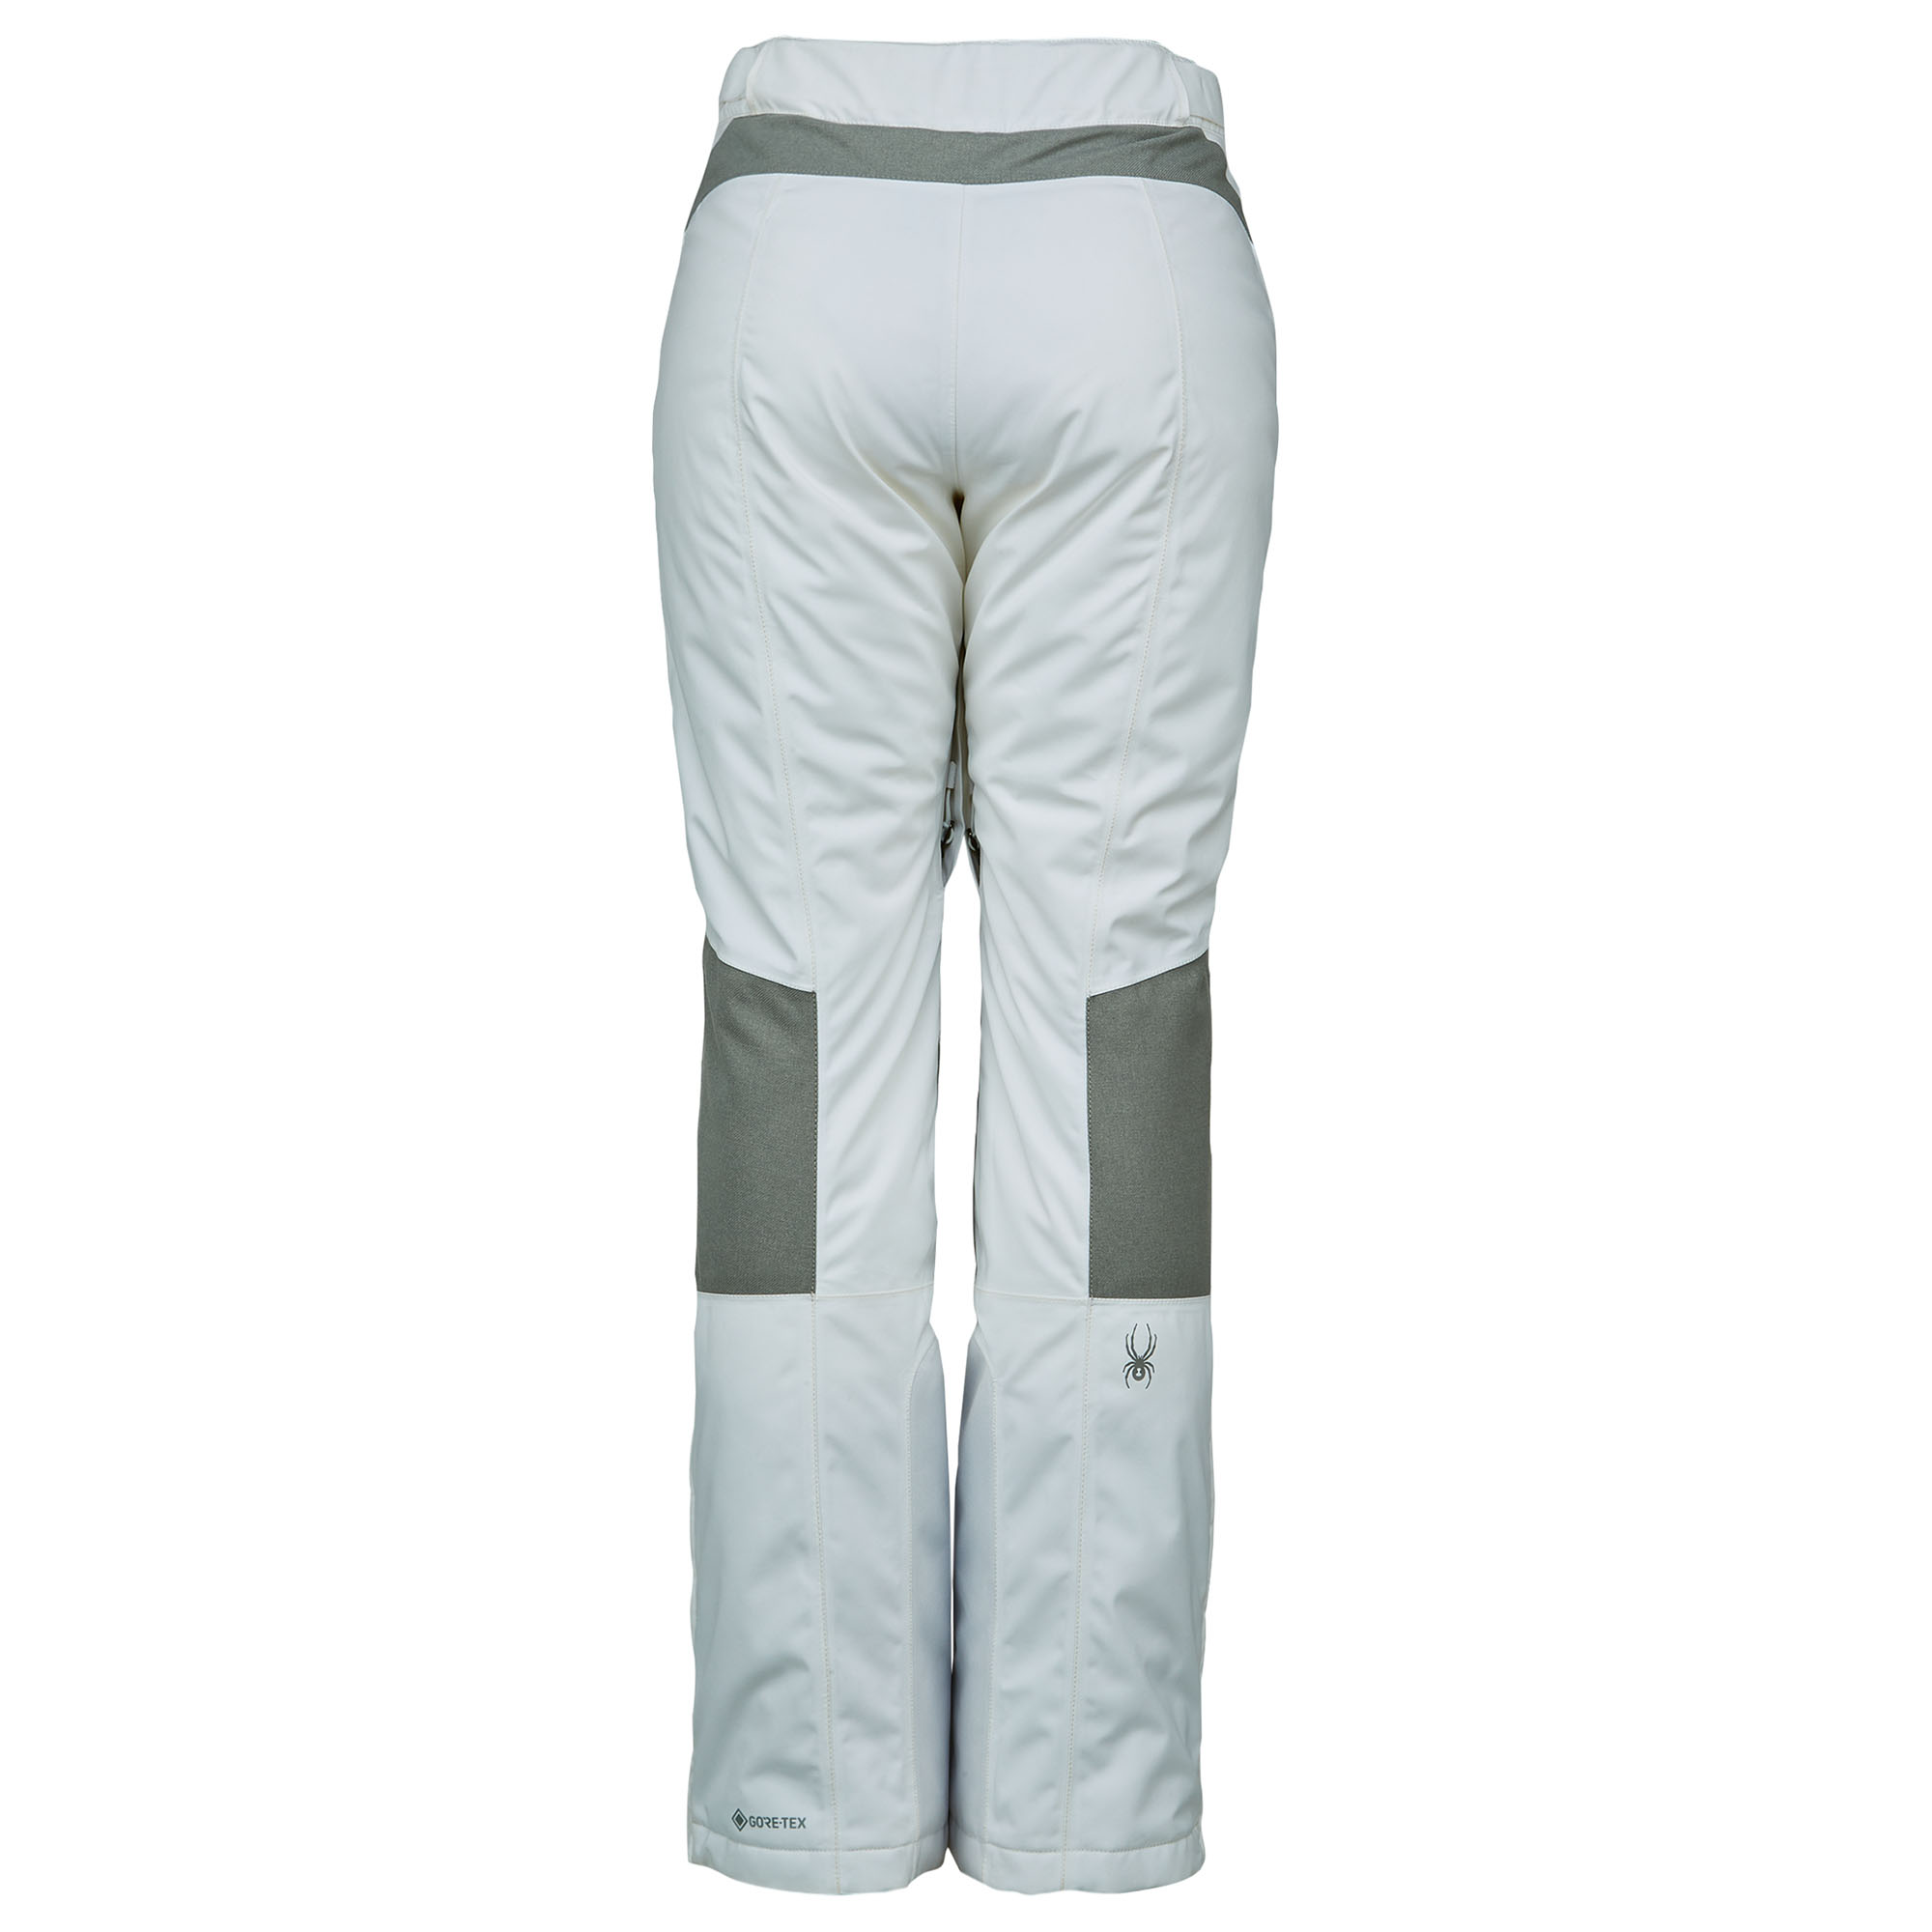 New w/Tags Size 6 Spyder Women's Me GORE-TEX Pants Ski Snowboarding Pant 